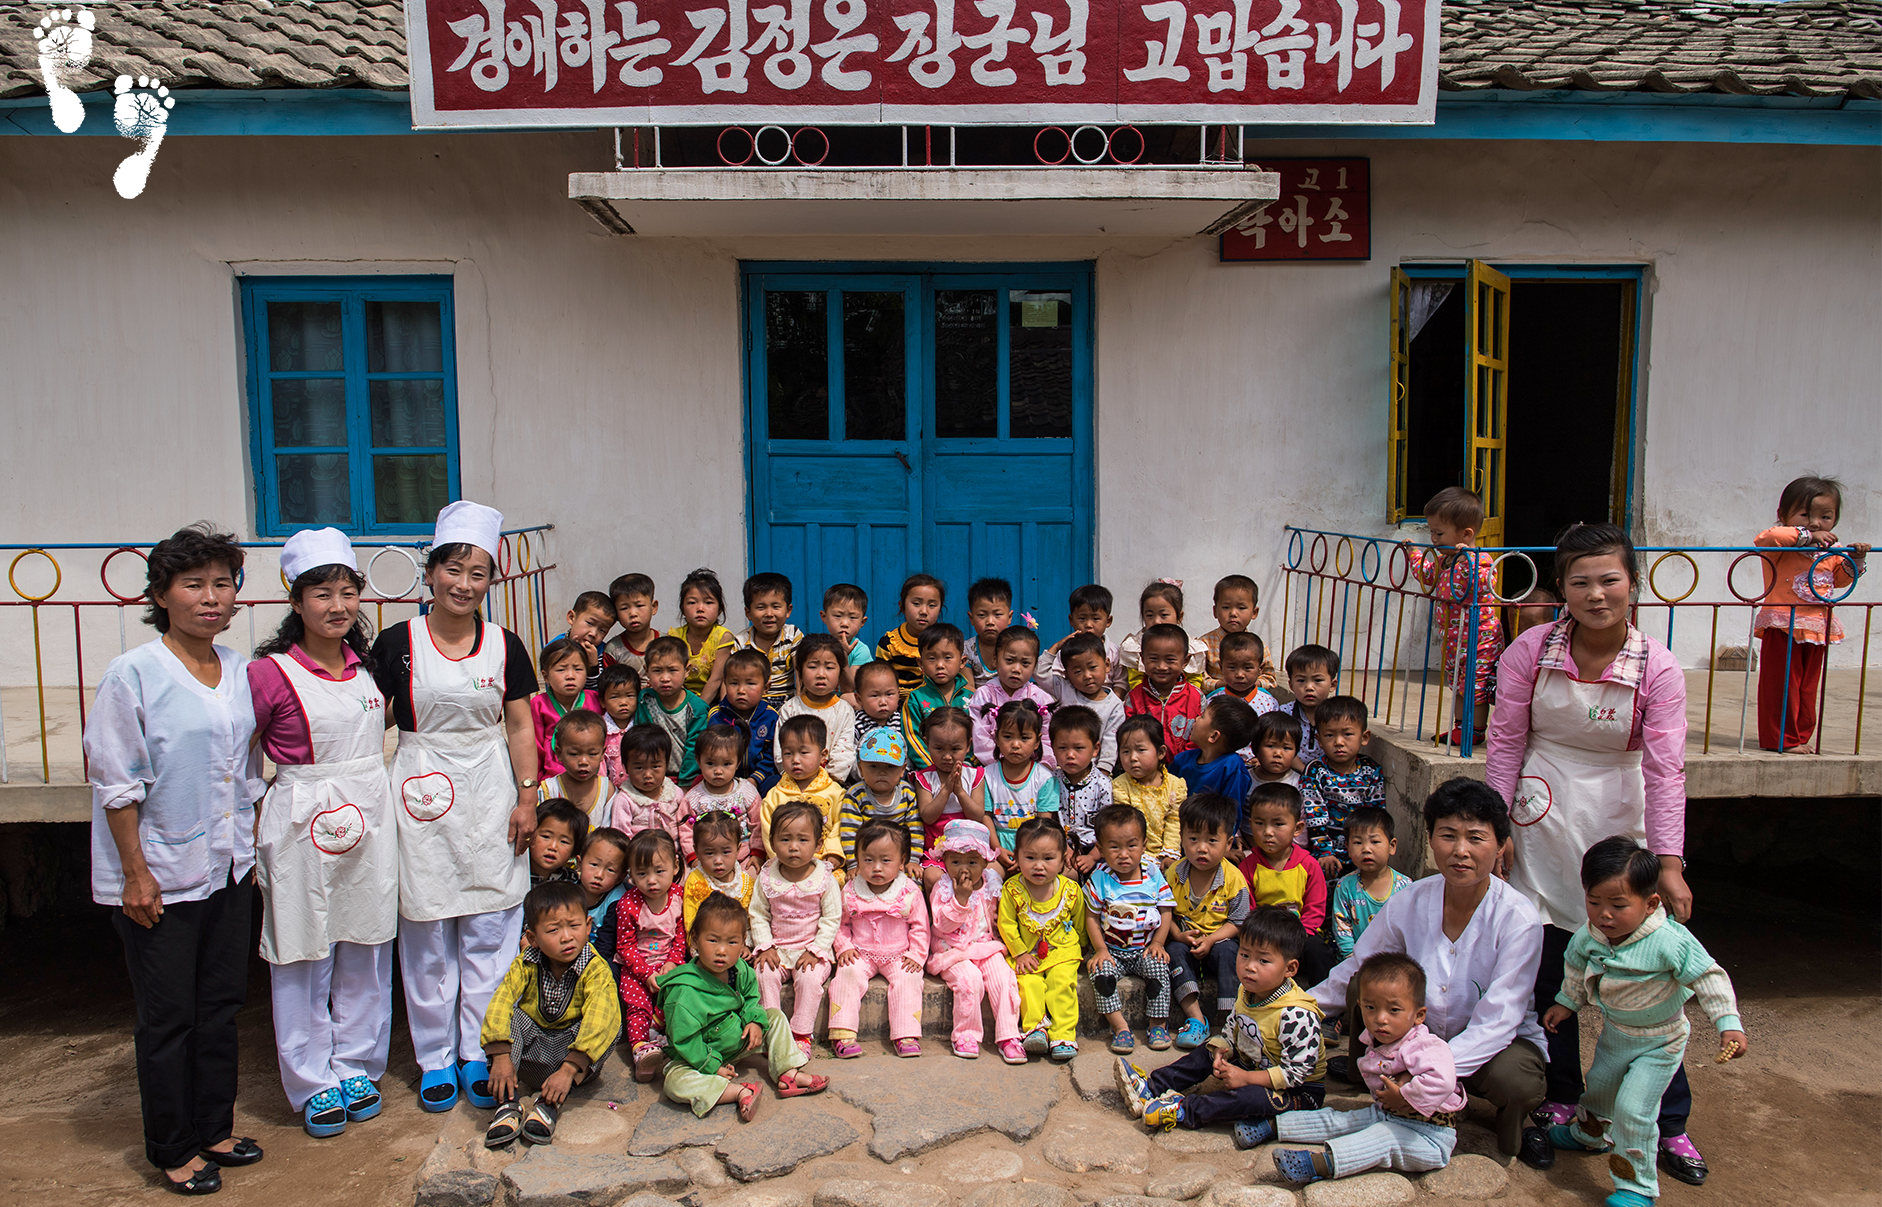 The Tongchon Myonggo #1 Daycare in Tonchon, North Korea.